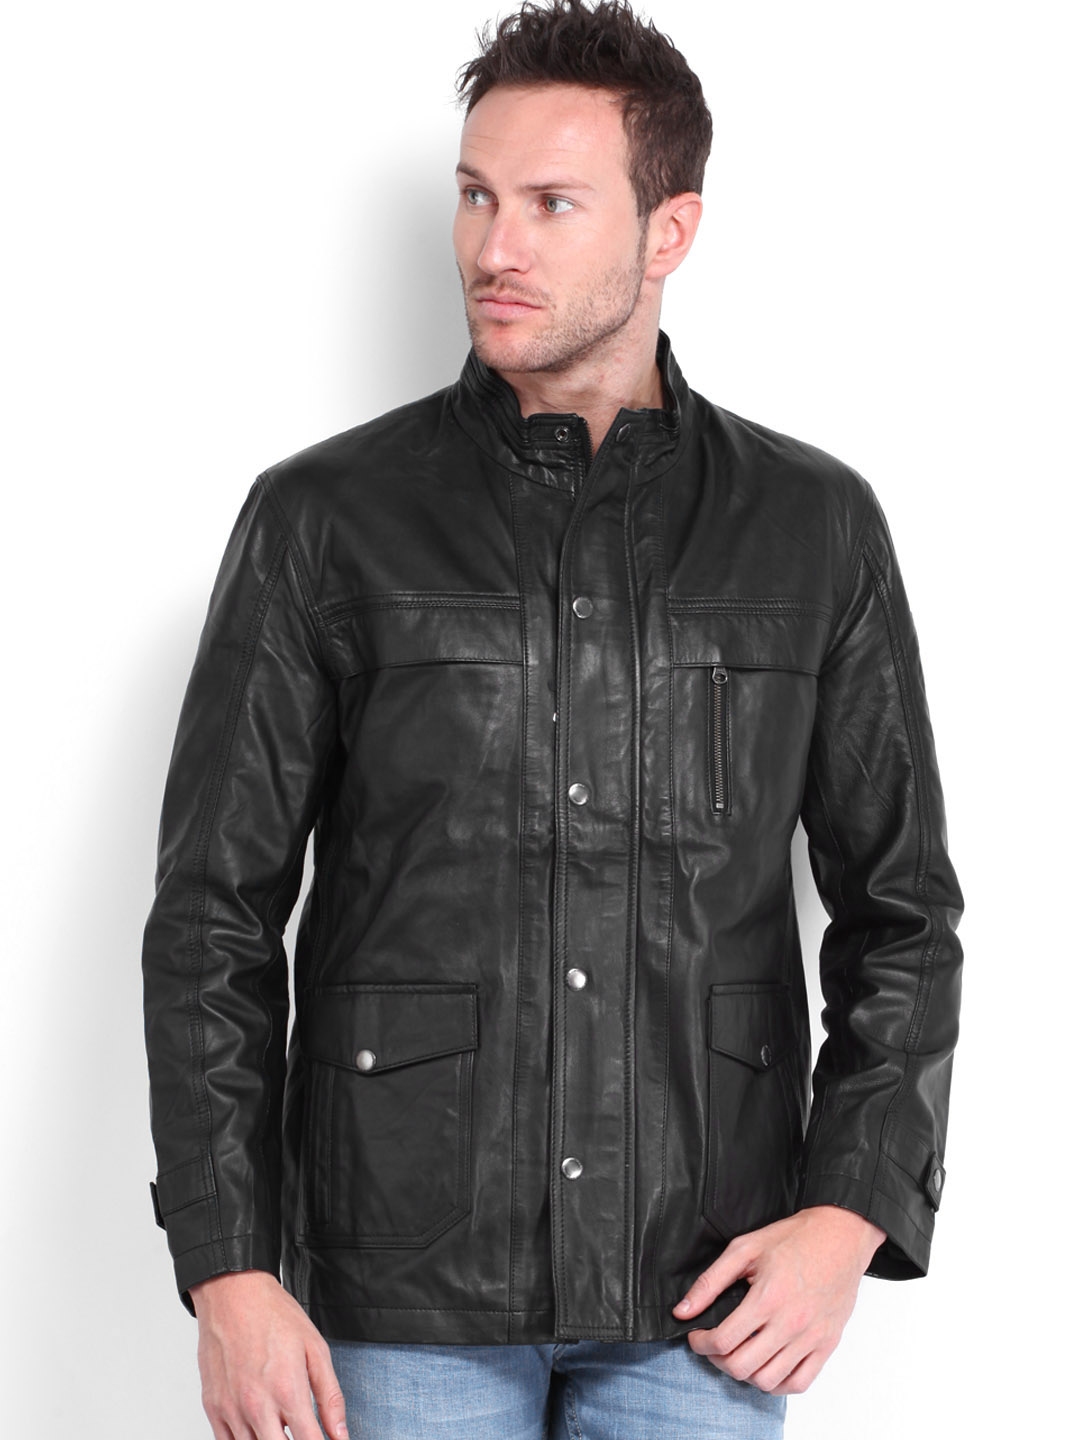 Buy U.S. Polo Assn. Black Leather Jacket - Jackets for Men 612565 | Myntra